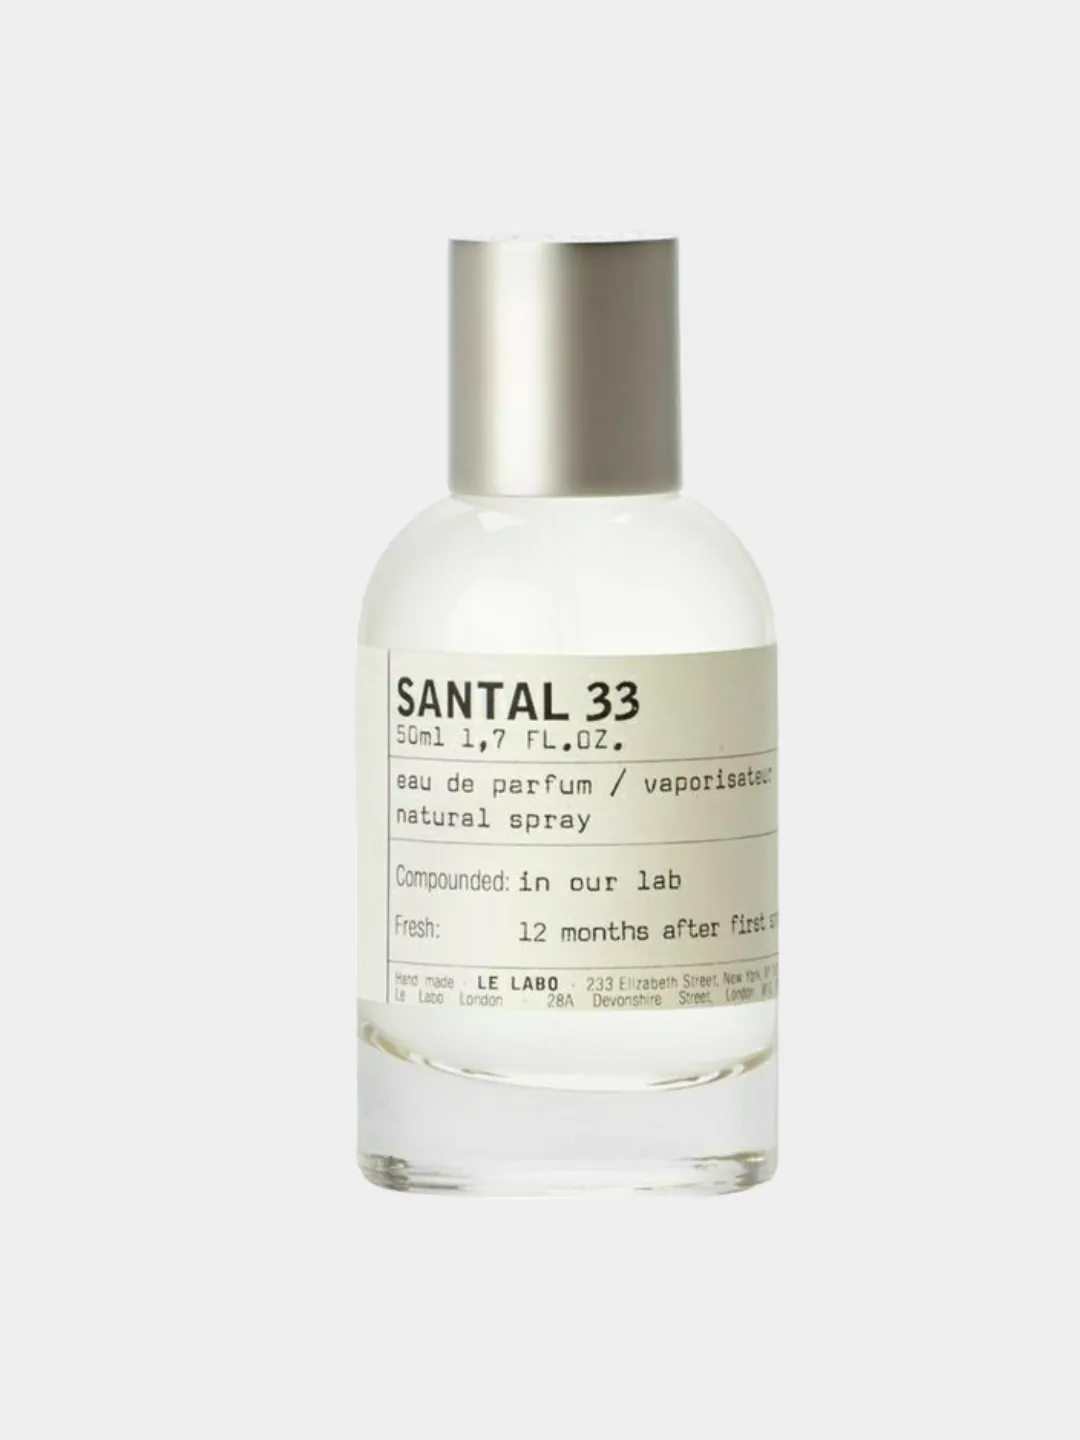 Мужской и женский парфюм Santal 33 Le Labo#1